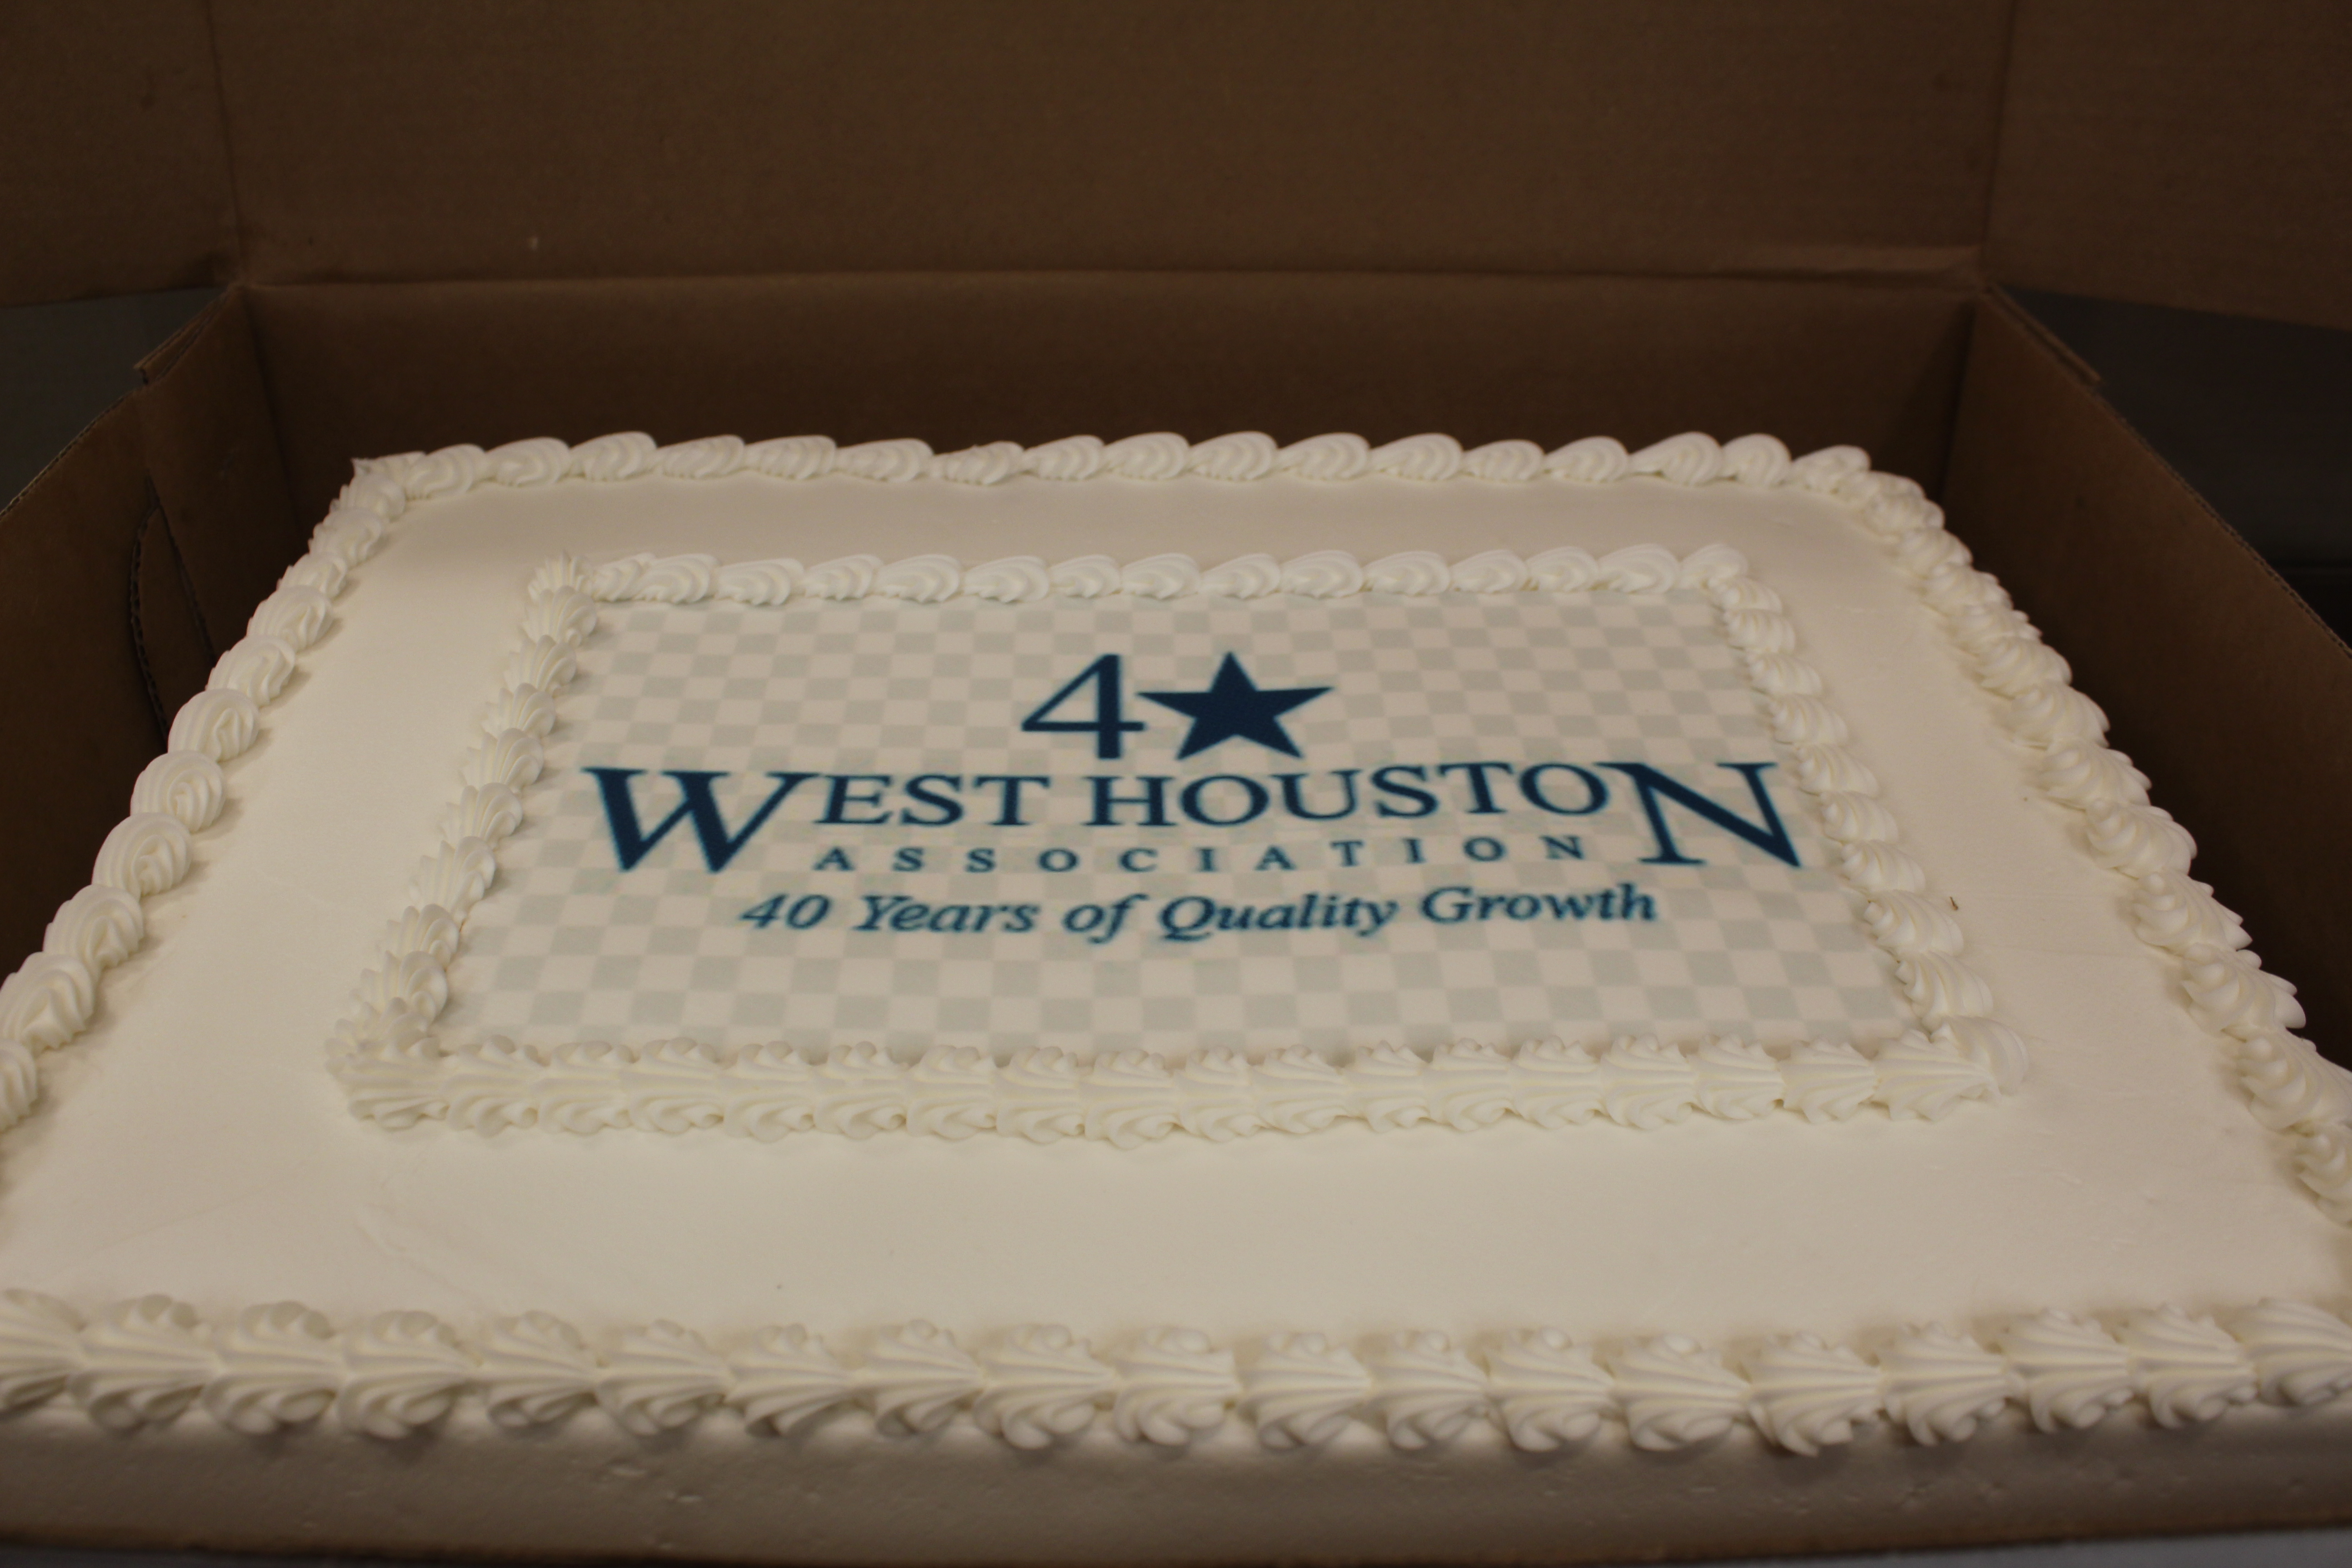 The West Houston Association Turns 40!